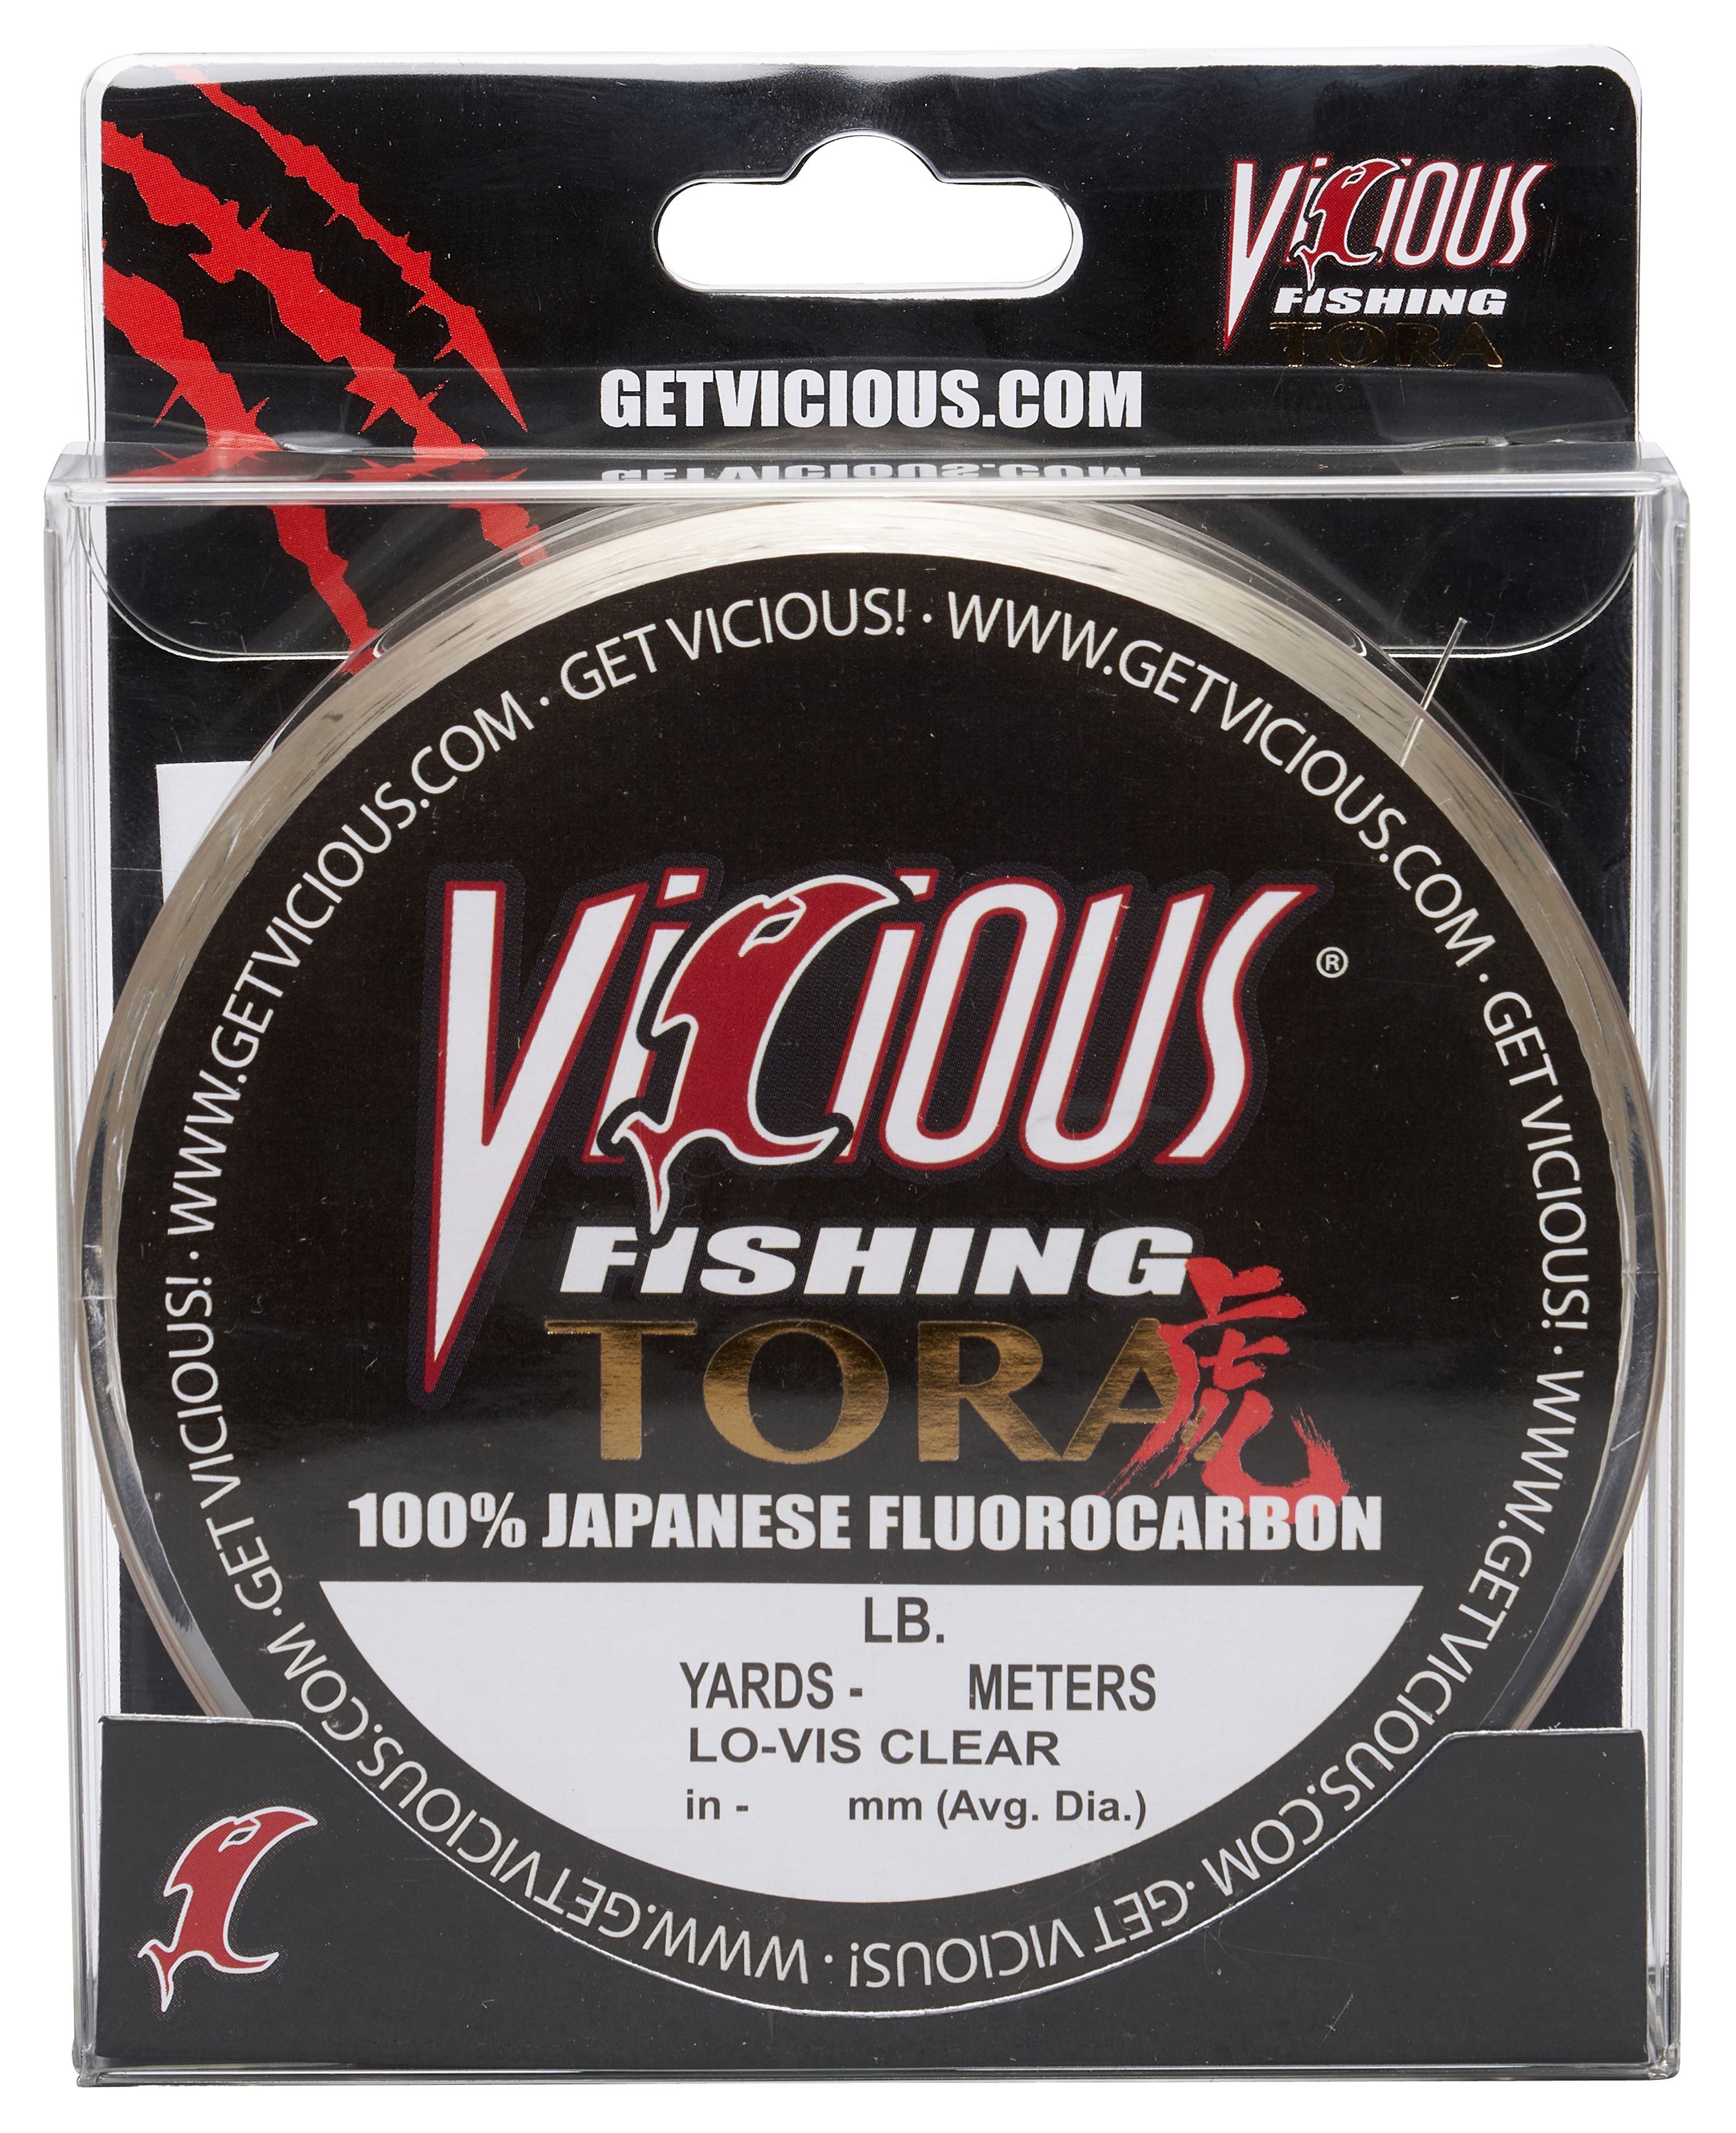 Vicious Fishing Tora 100% Japanese Fluorocarbon Fishing Line